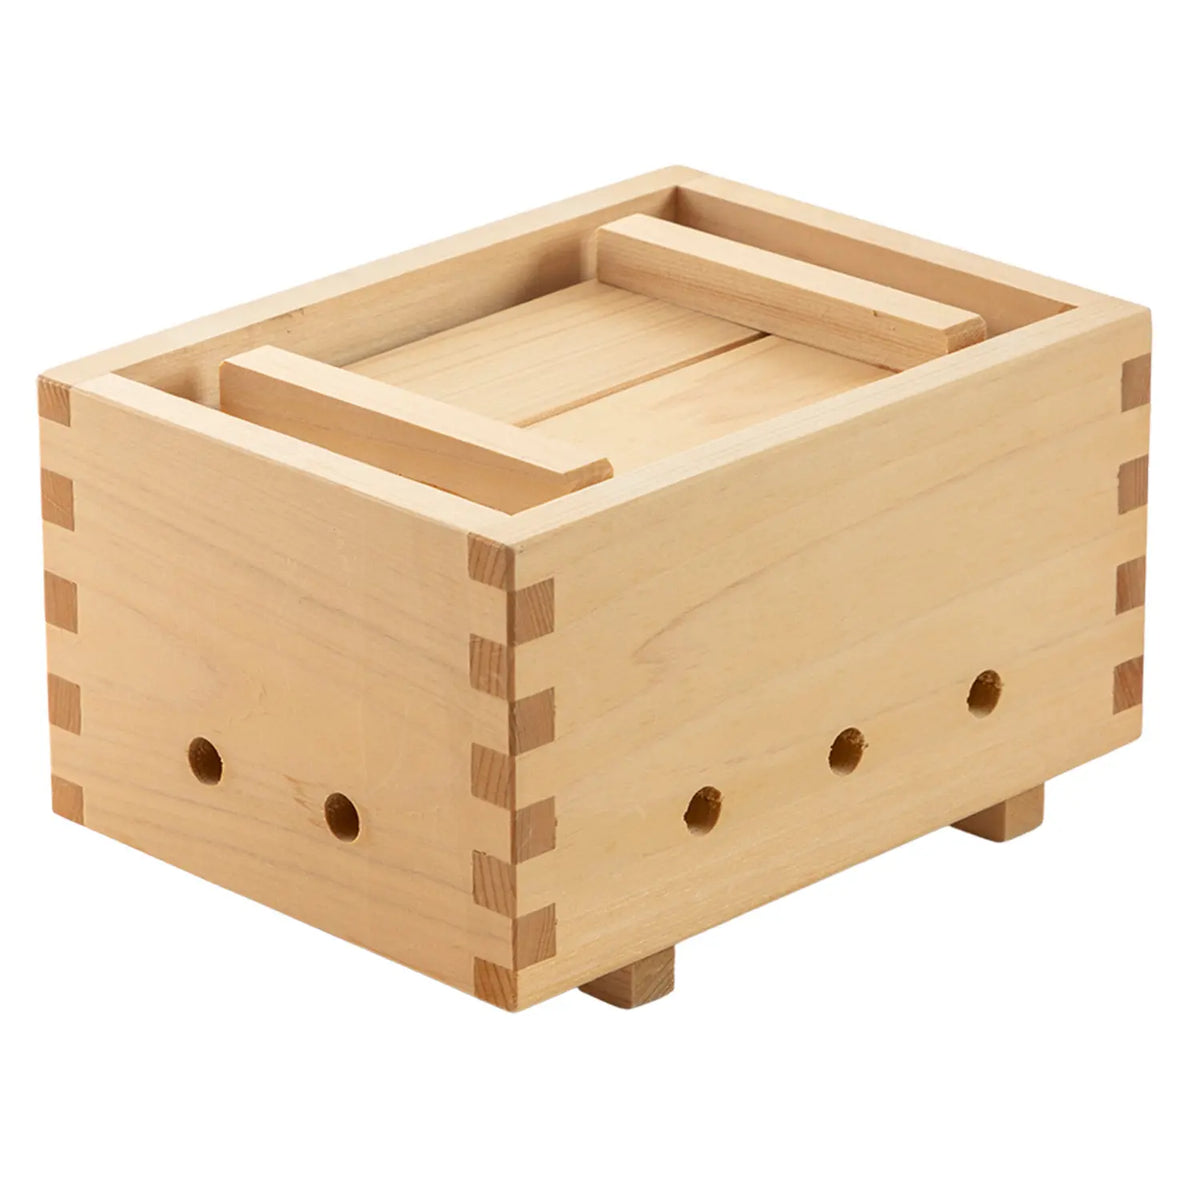 Yamacoh Wooden Tofu Maker Kit